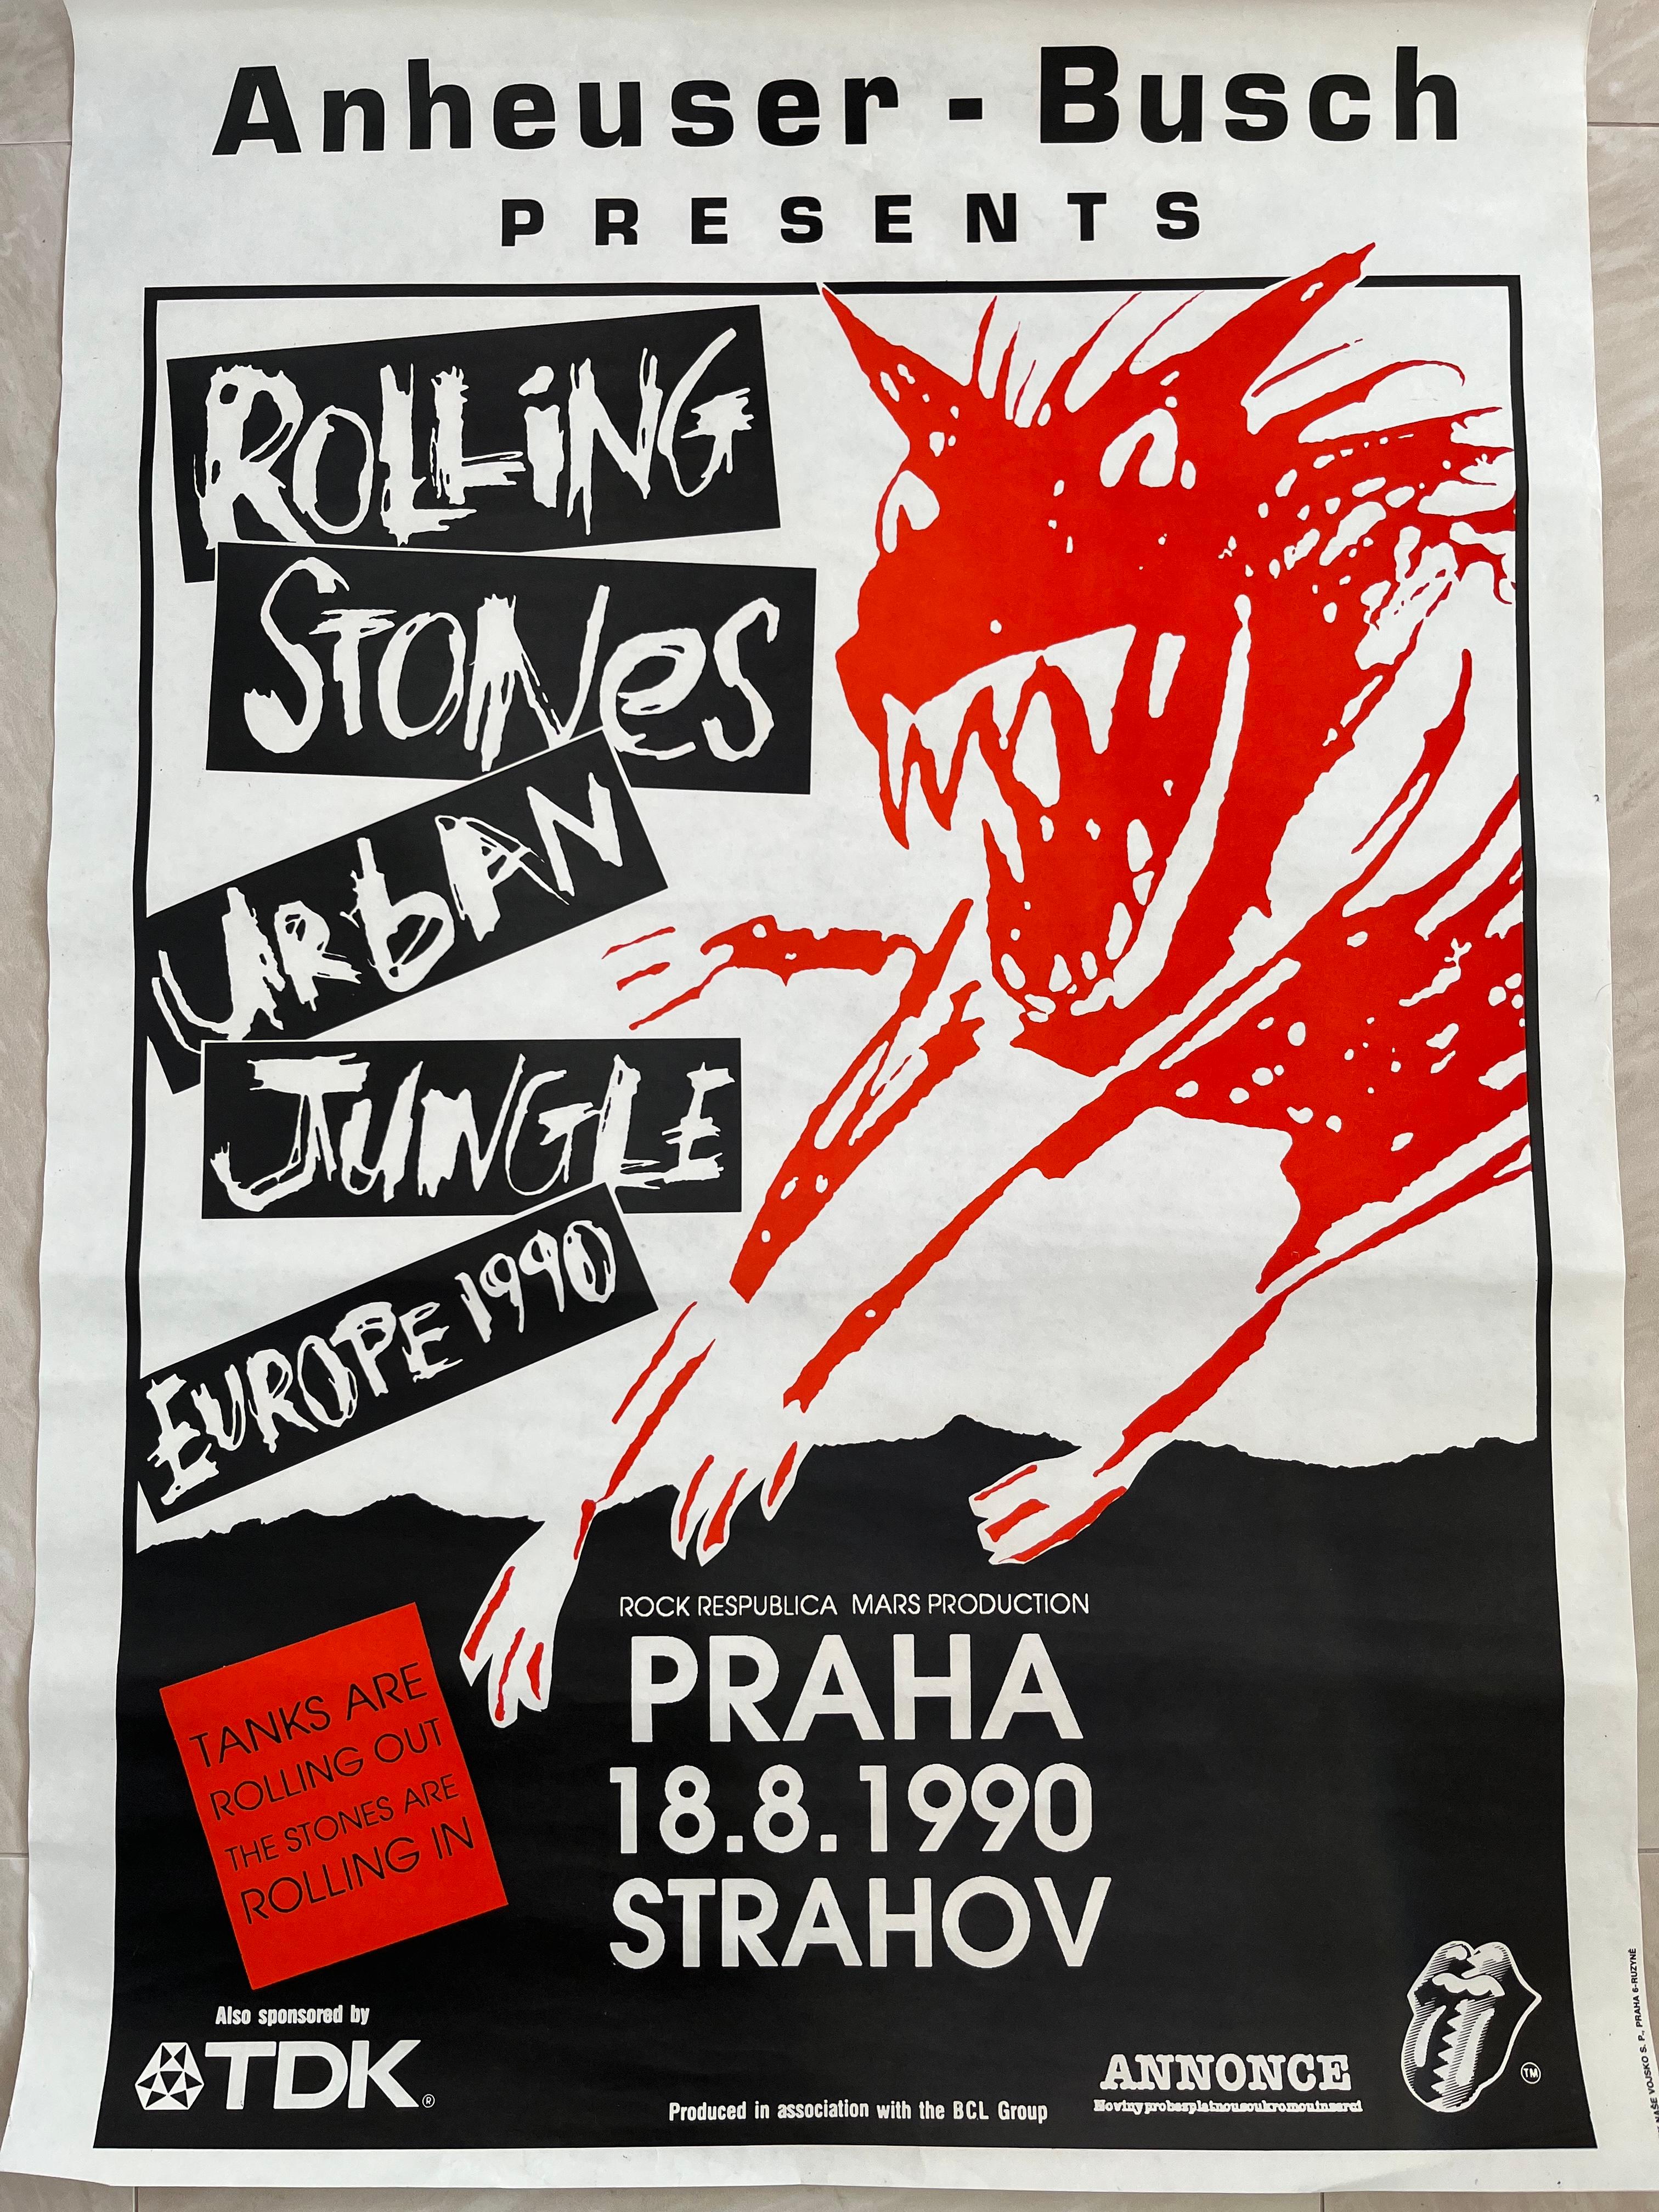 - 1990s
- original poster, no reproduction
- suitable for framing
jr.